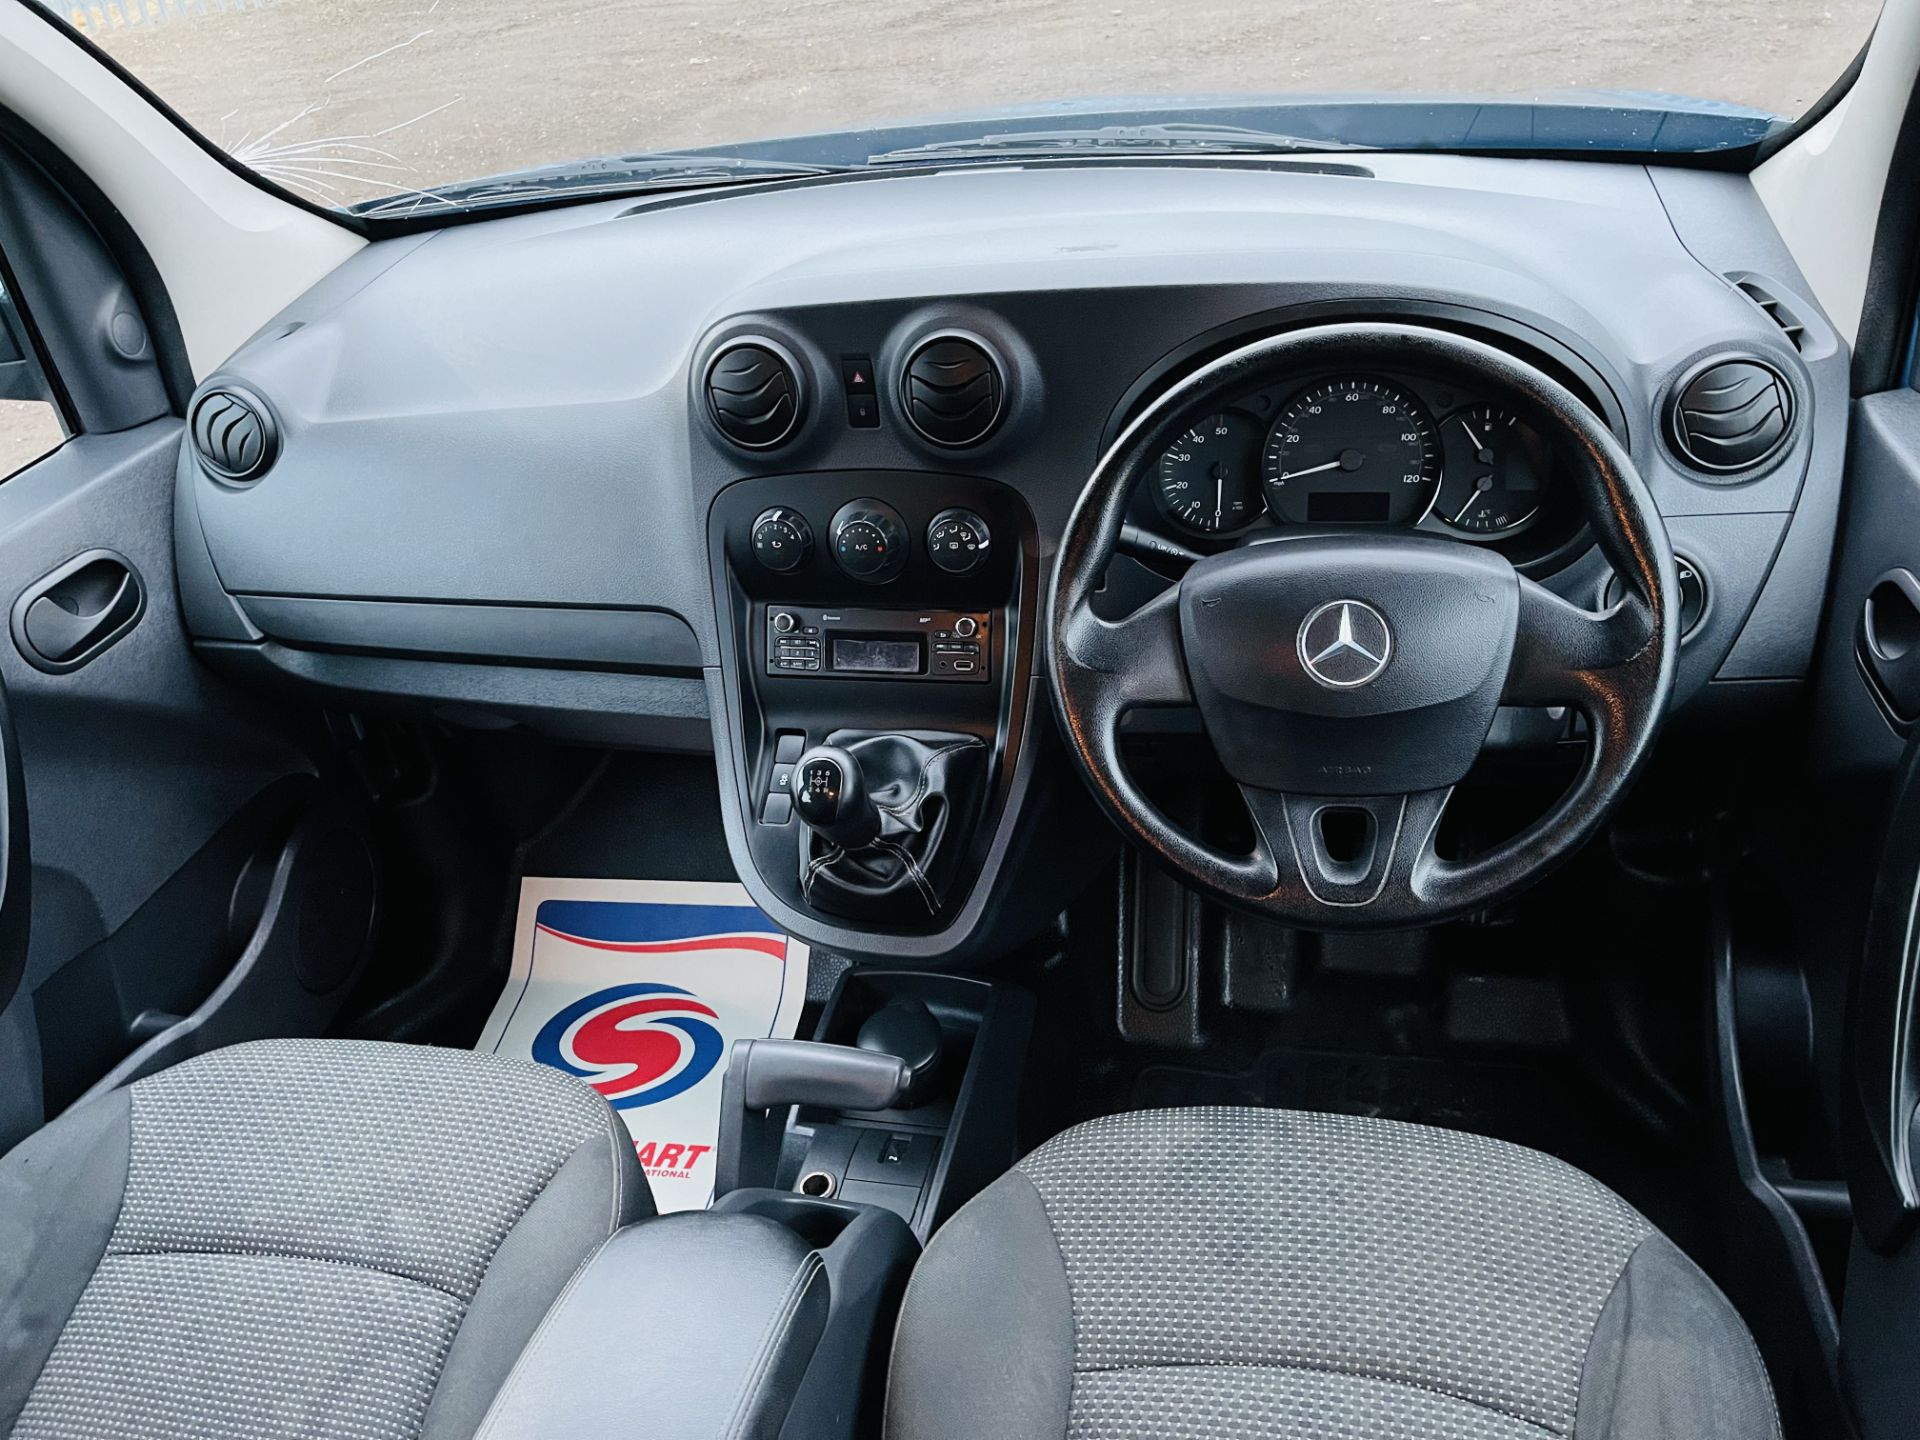 Mercedes-Benz Citan 1.5 CDI 109 Dualiner*Crew Van*2013 '63 Reg' Air Con Roof Rack No Vat Save 20% - Image 18 of 24